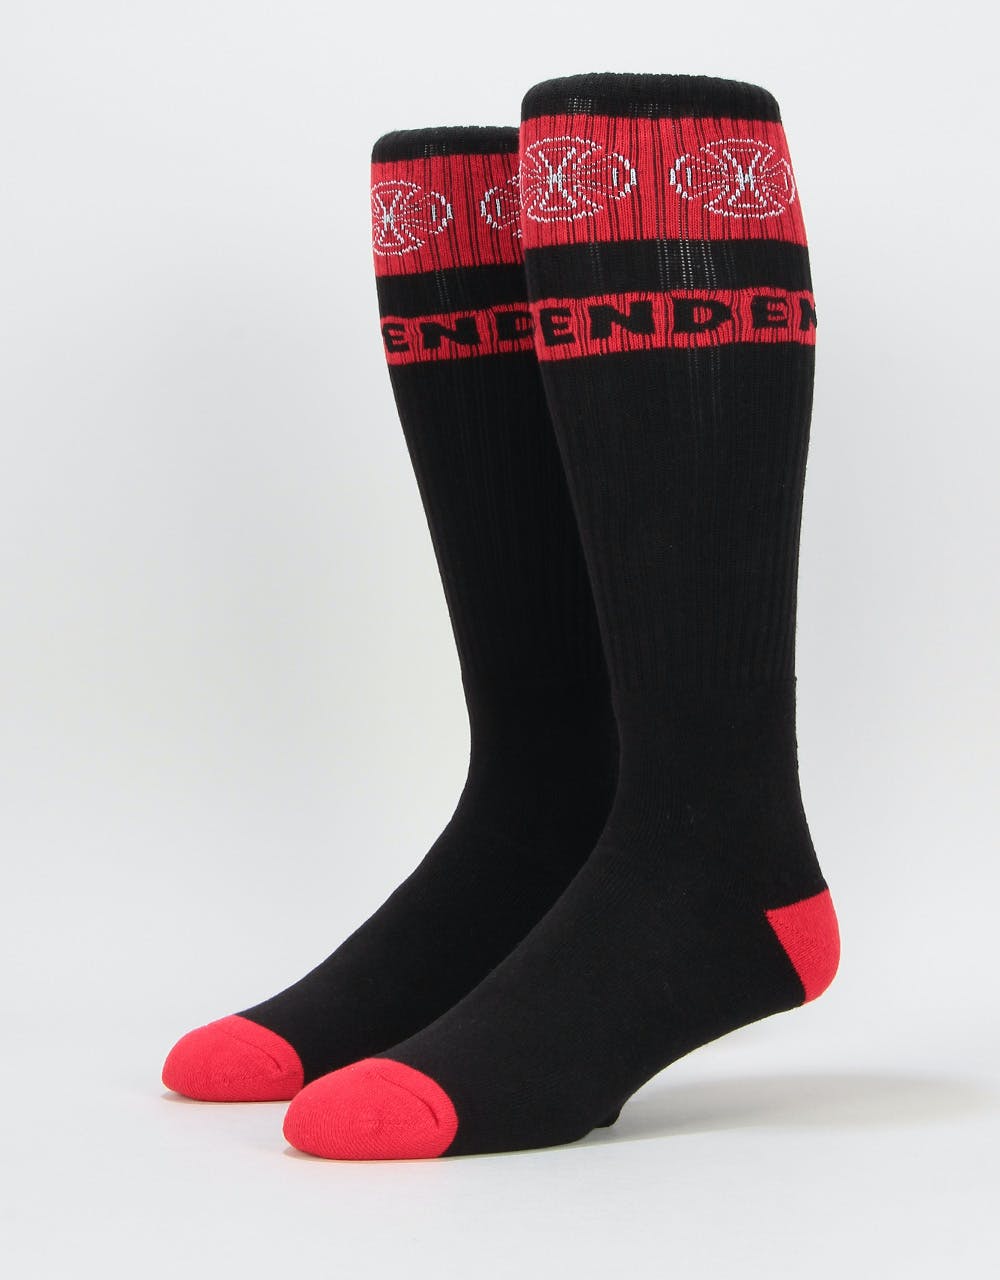 Independent Woven Crosses Socks - Black